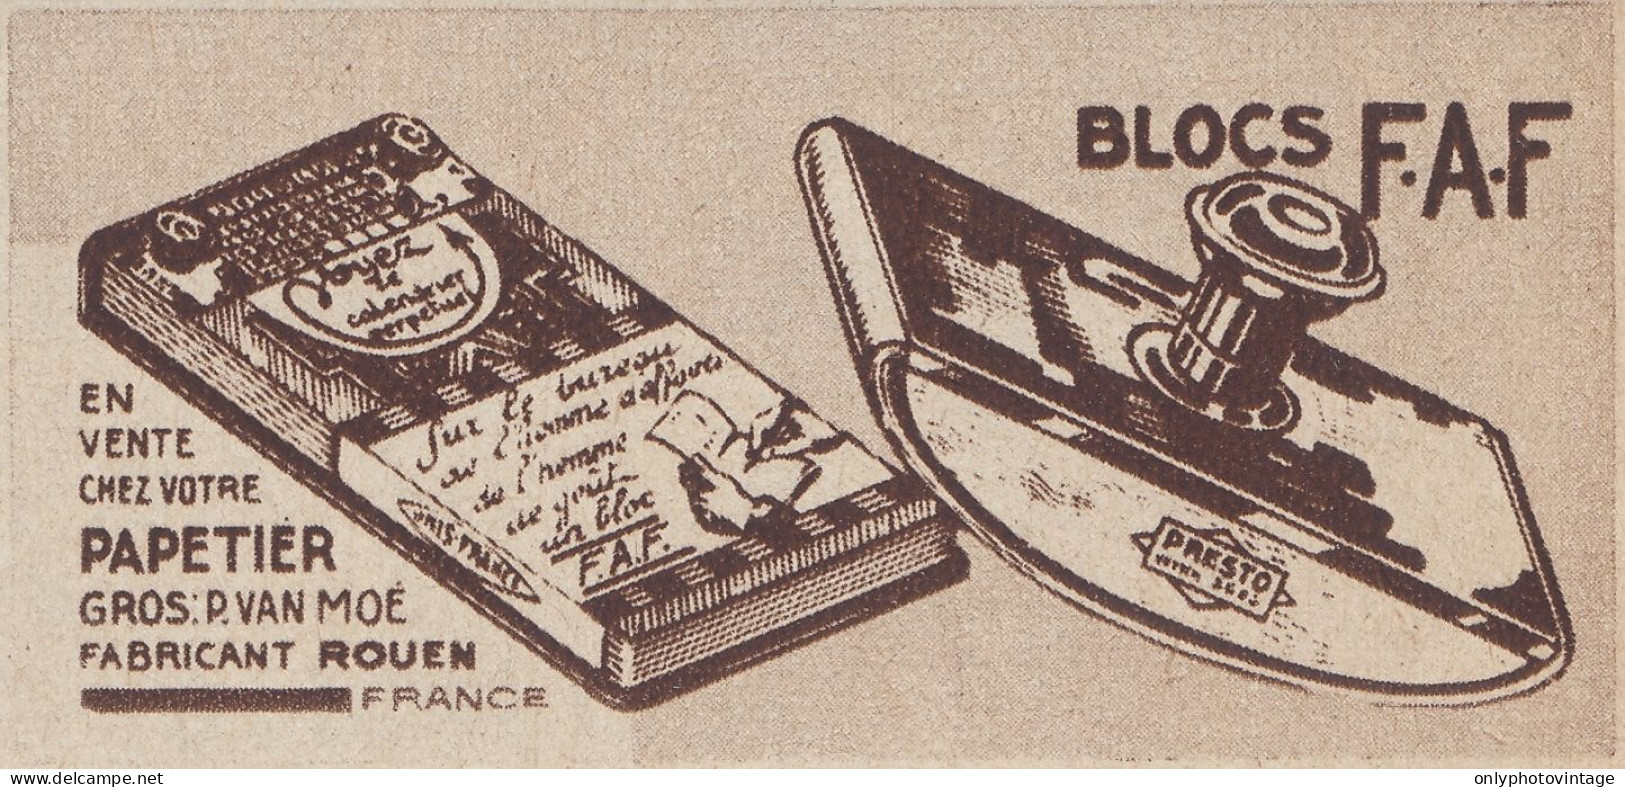 Papetier - Blocs F.A.F. - 1938 Vintage Advertising - Pubblicit� Epoca - Publicidad